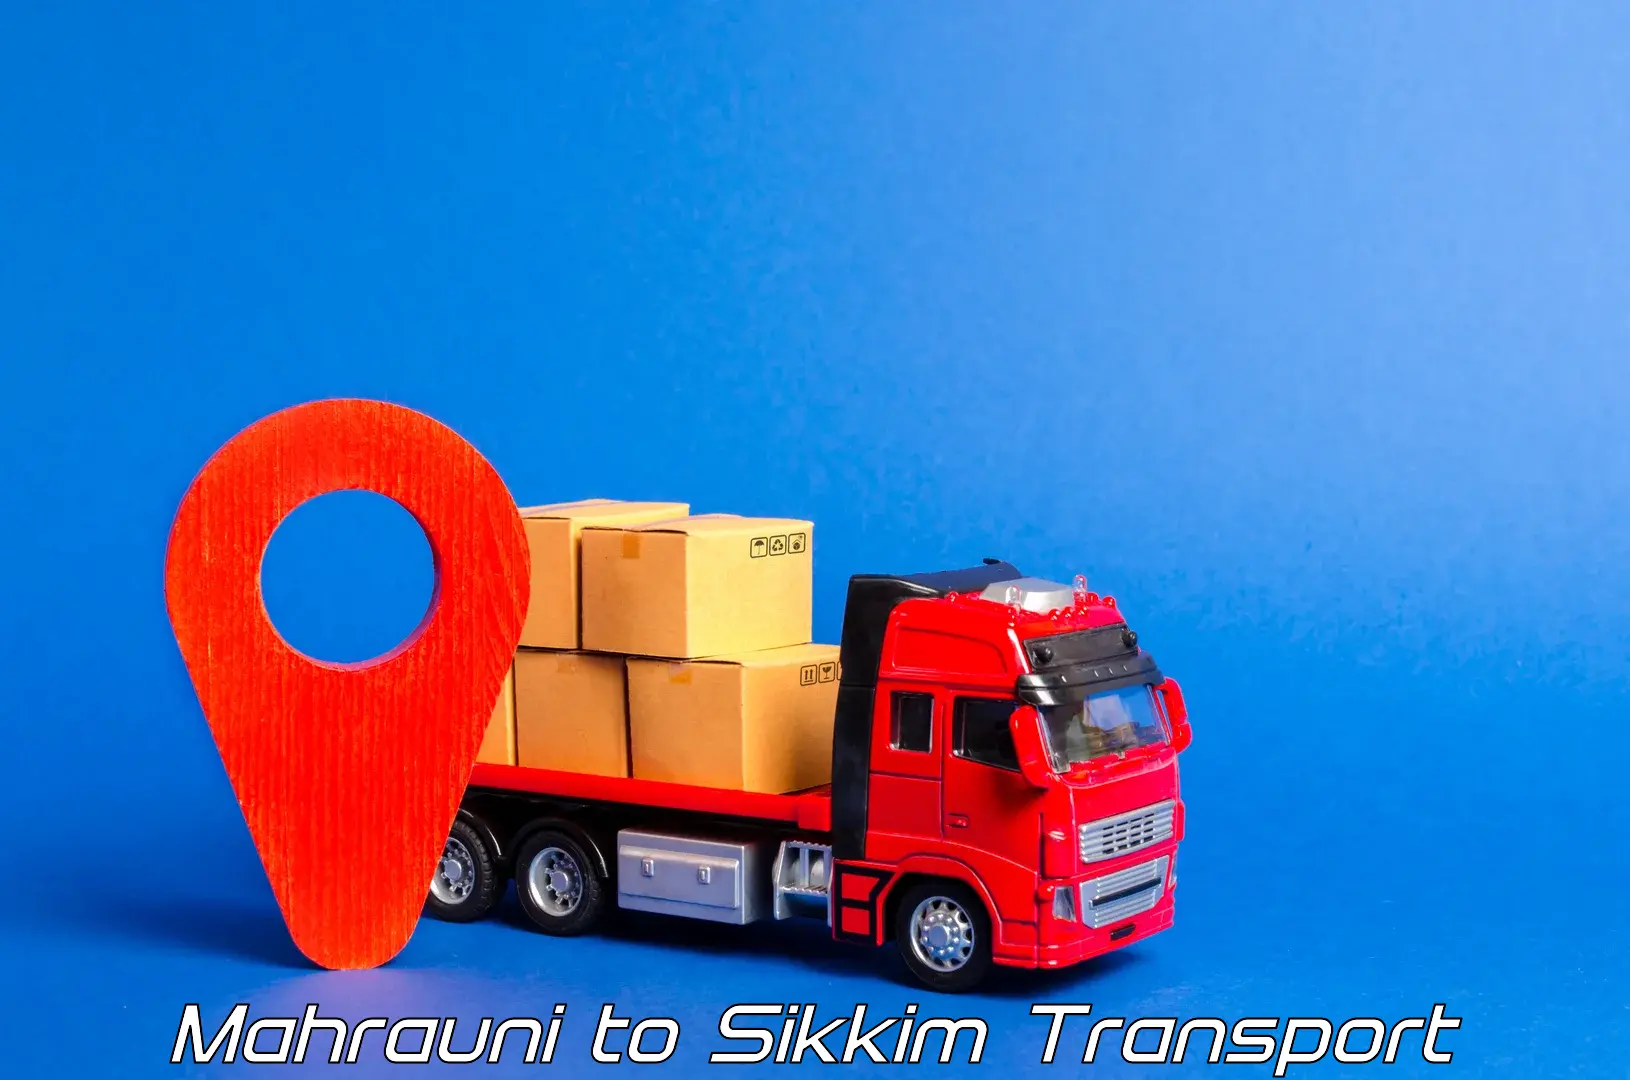 Cycle transportation service Mahrauni to East Sikkim